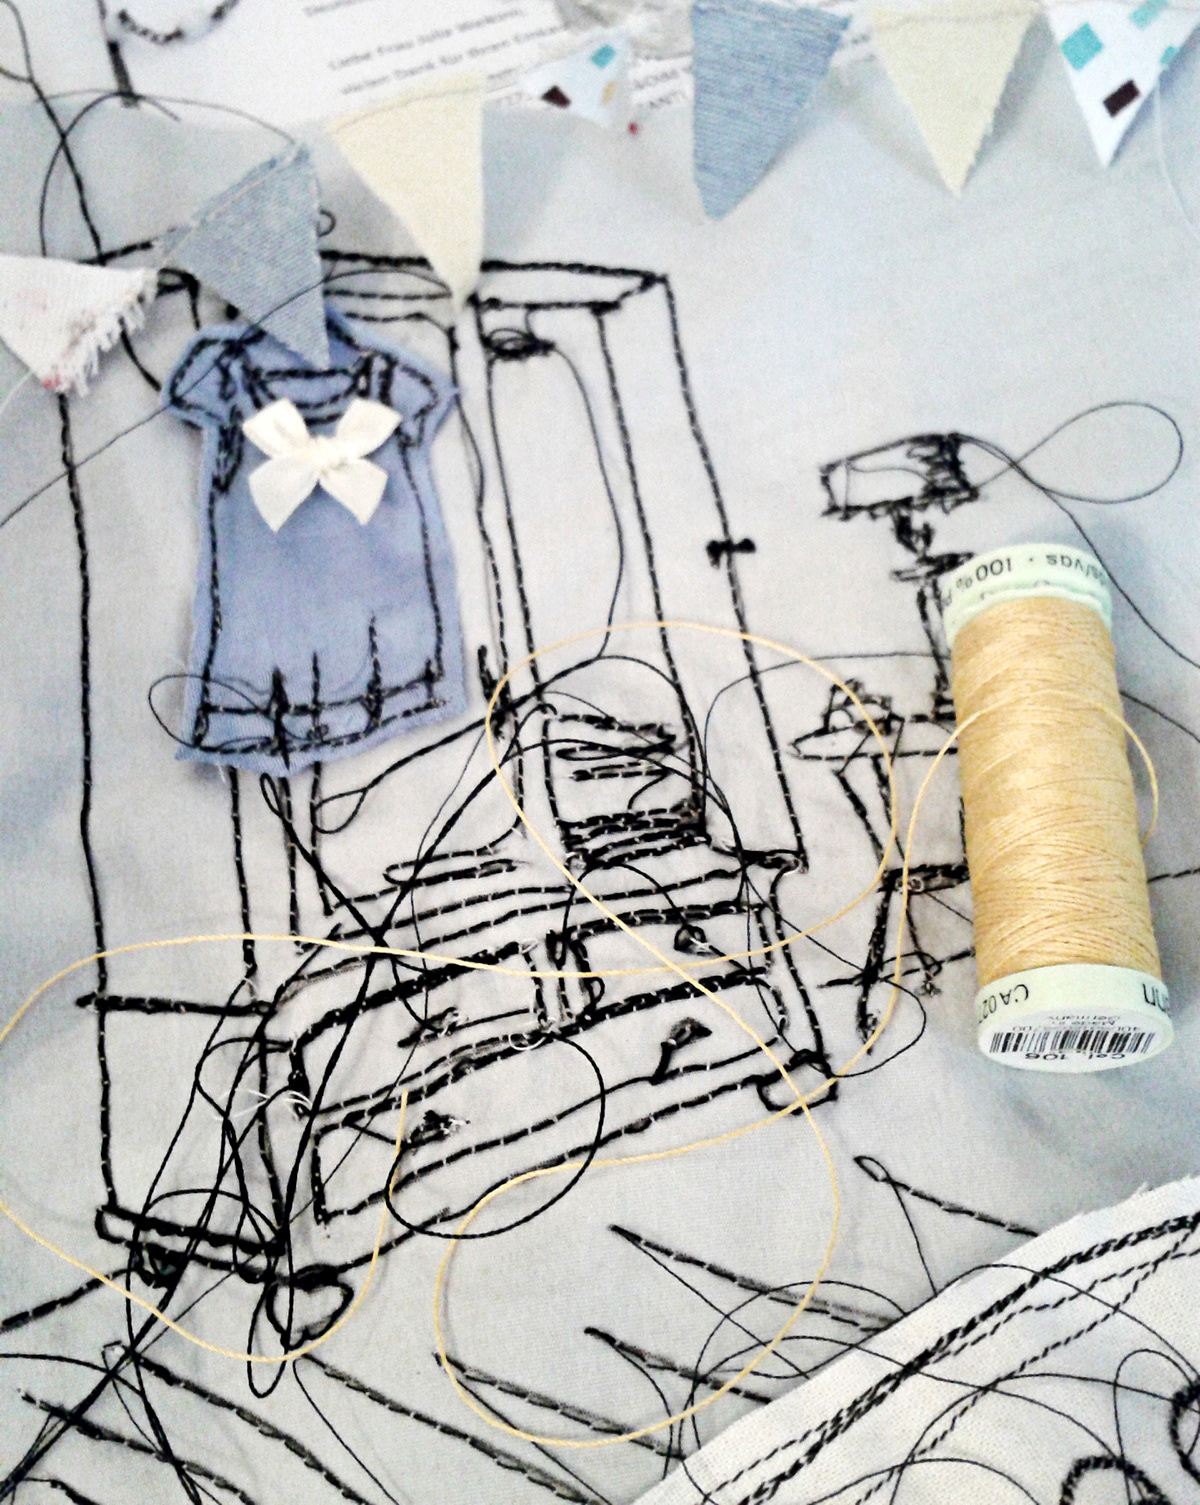  fashion sewing  sew  Illustration  sewed illustration  Nähillustration  vintage  mode  blonde  Faden  nähen  genäht handmade second hand craft